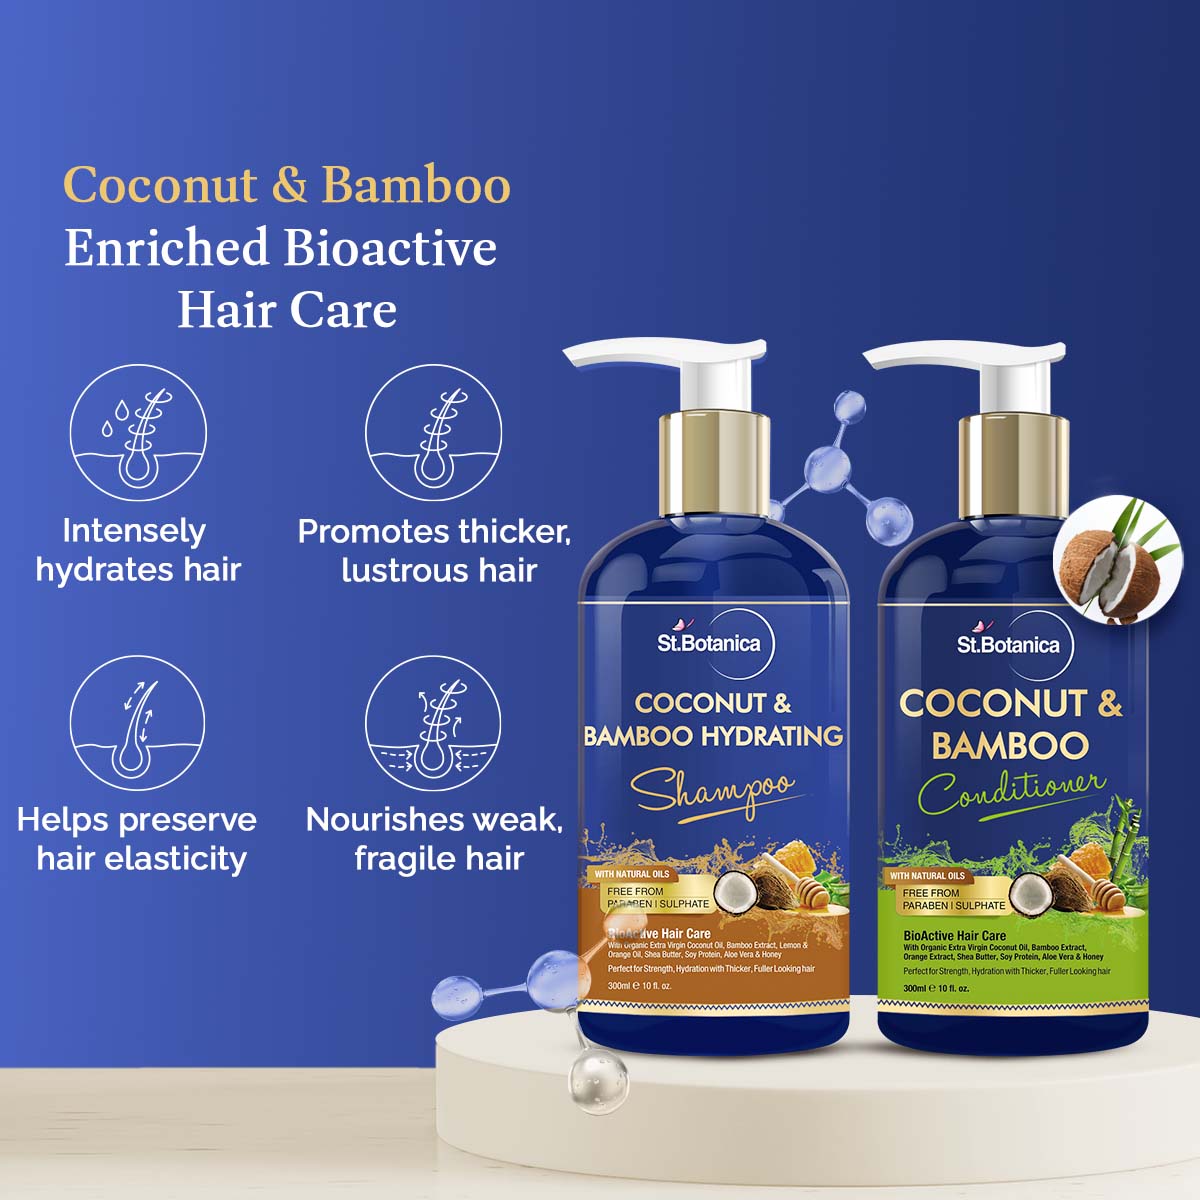 St.Botanica Coconut Oil & Bamboo Hair Strengthening Shampoo + St.Botanica Coconut & Bamboo Hair Conditioner, 300ml